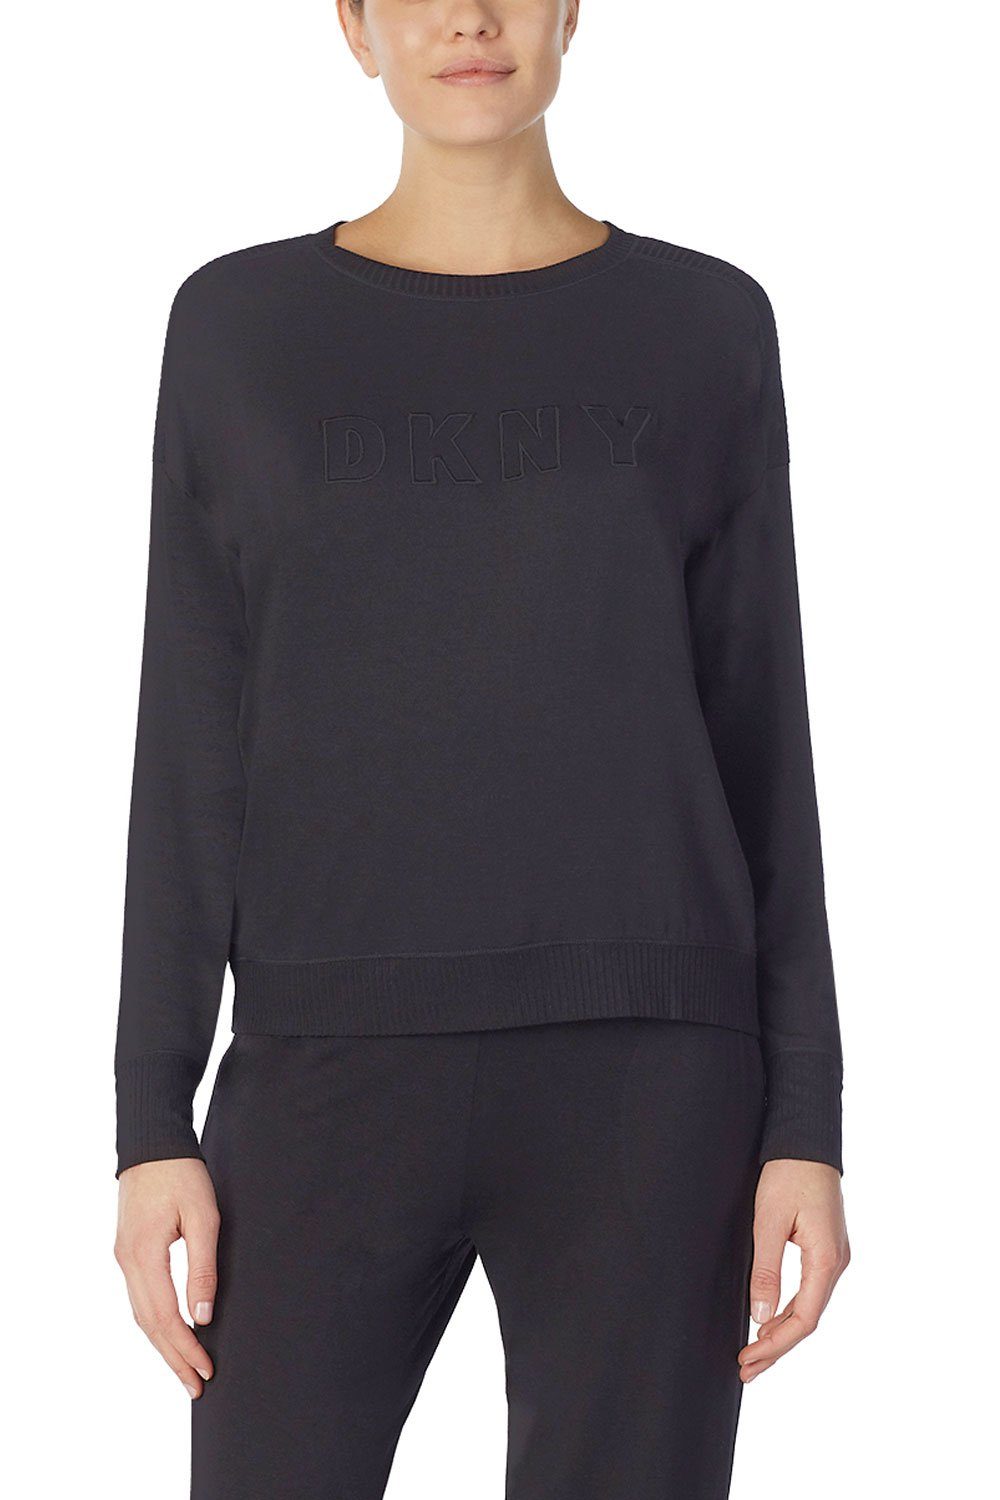 DKNY YI3419330 Top Essentials black Sleepshirt